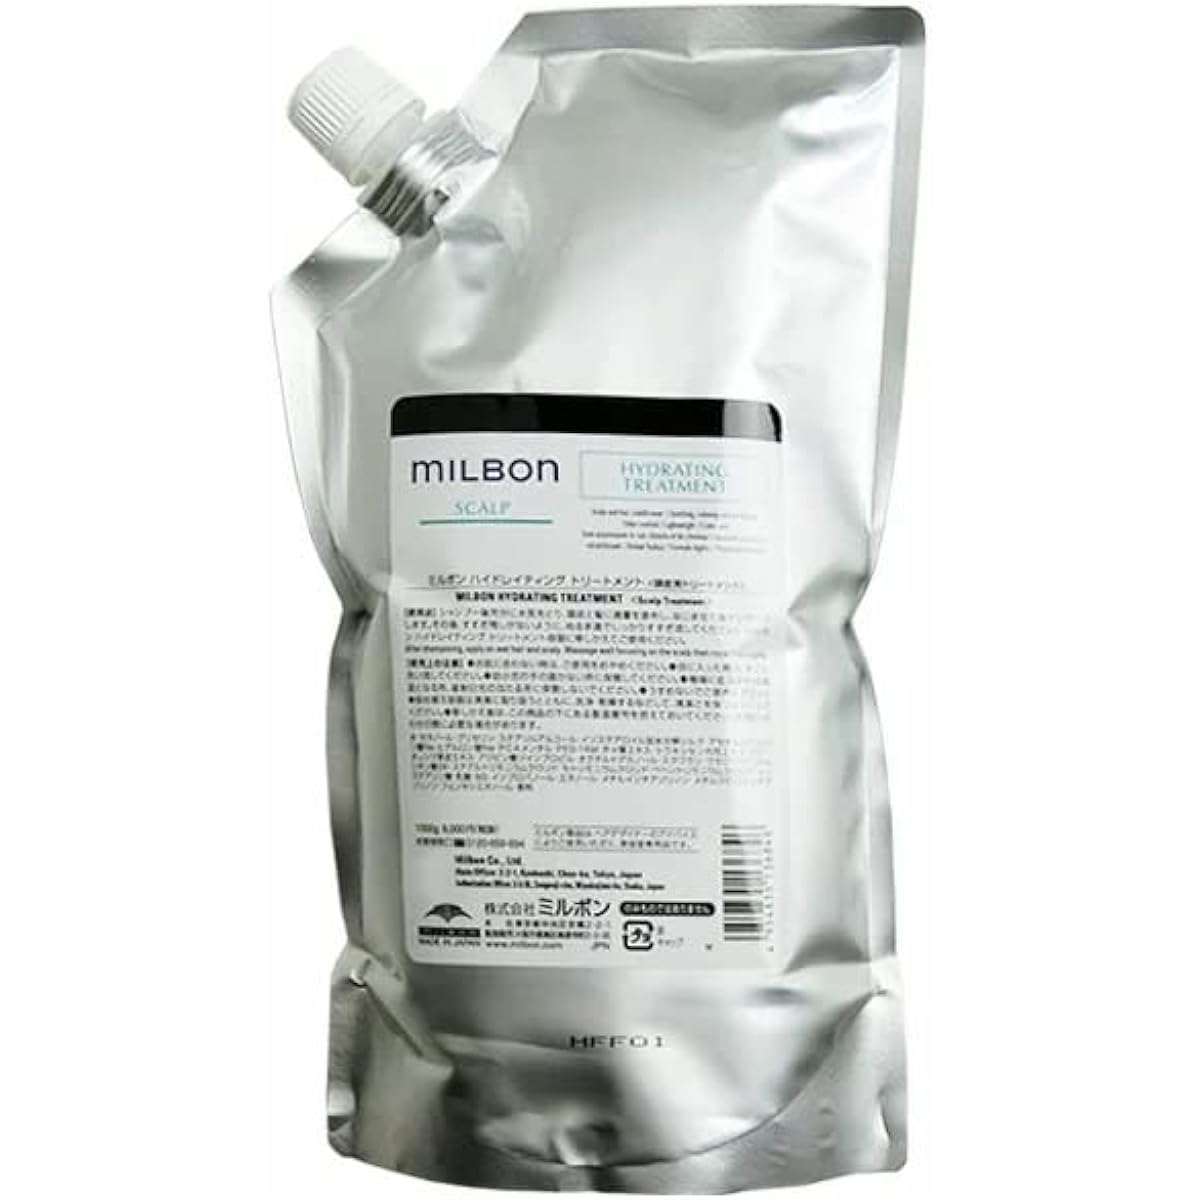 Milbon Hydrating Treatment <Refill> (1000g)